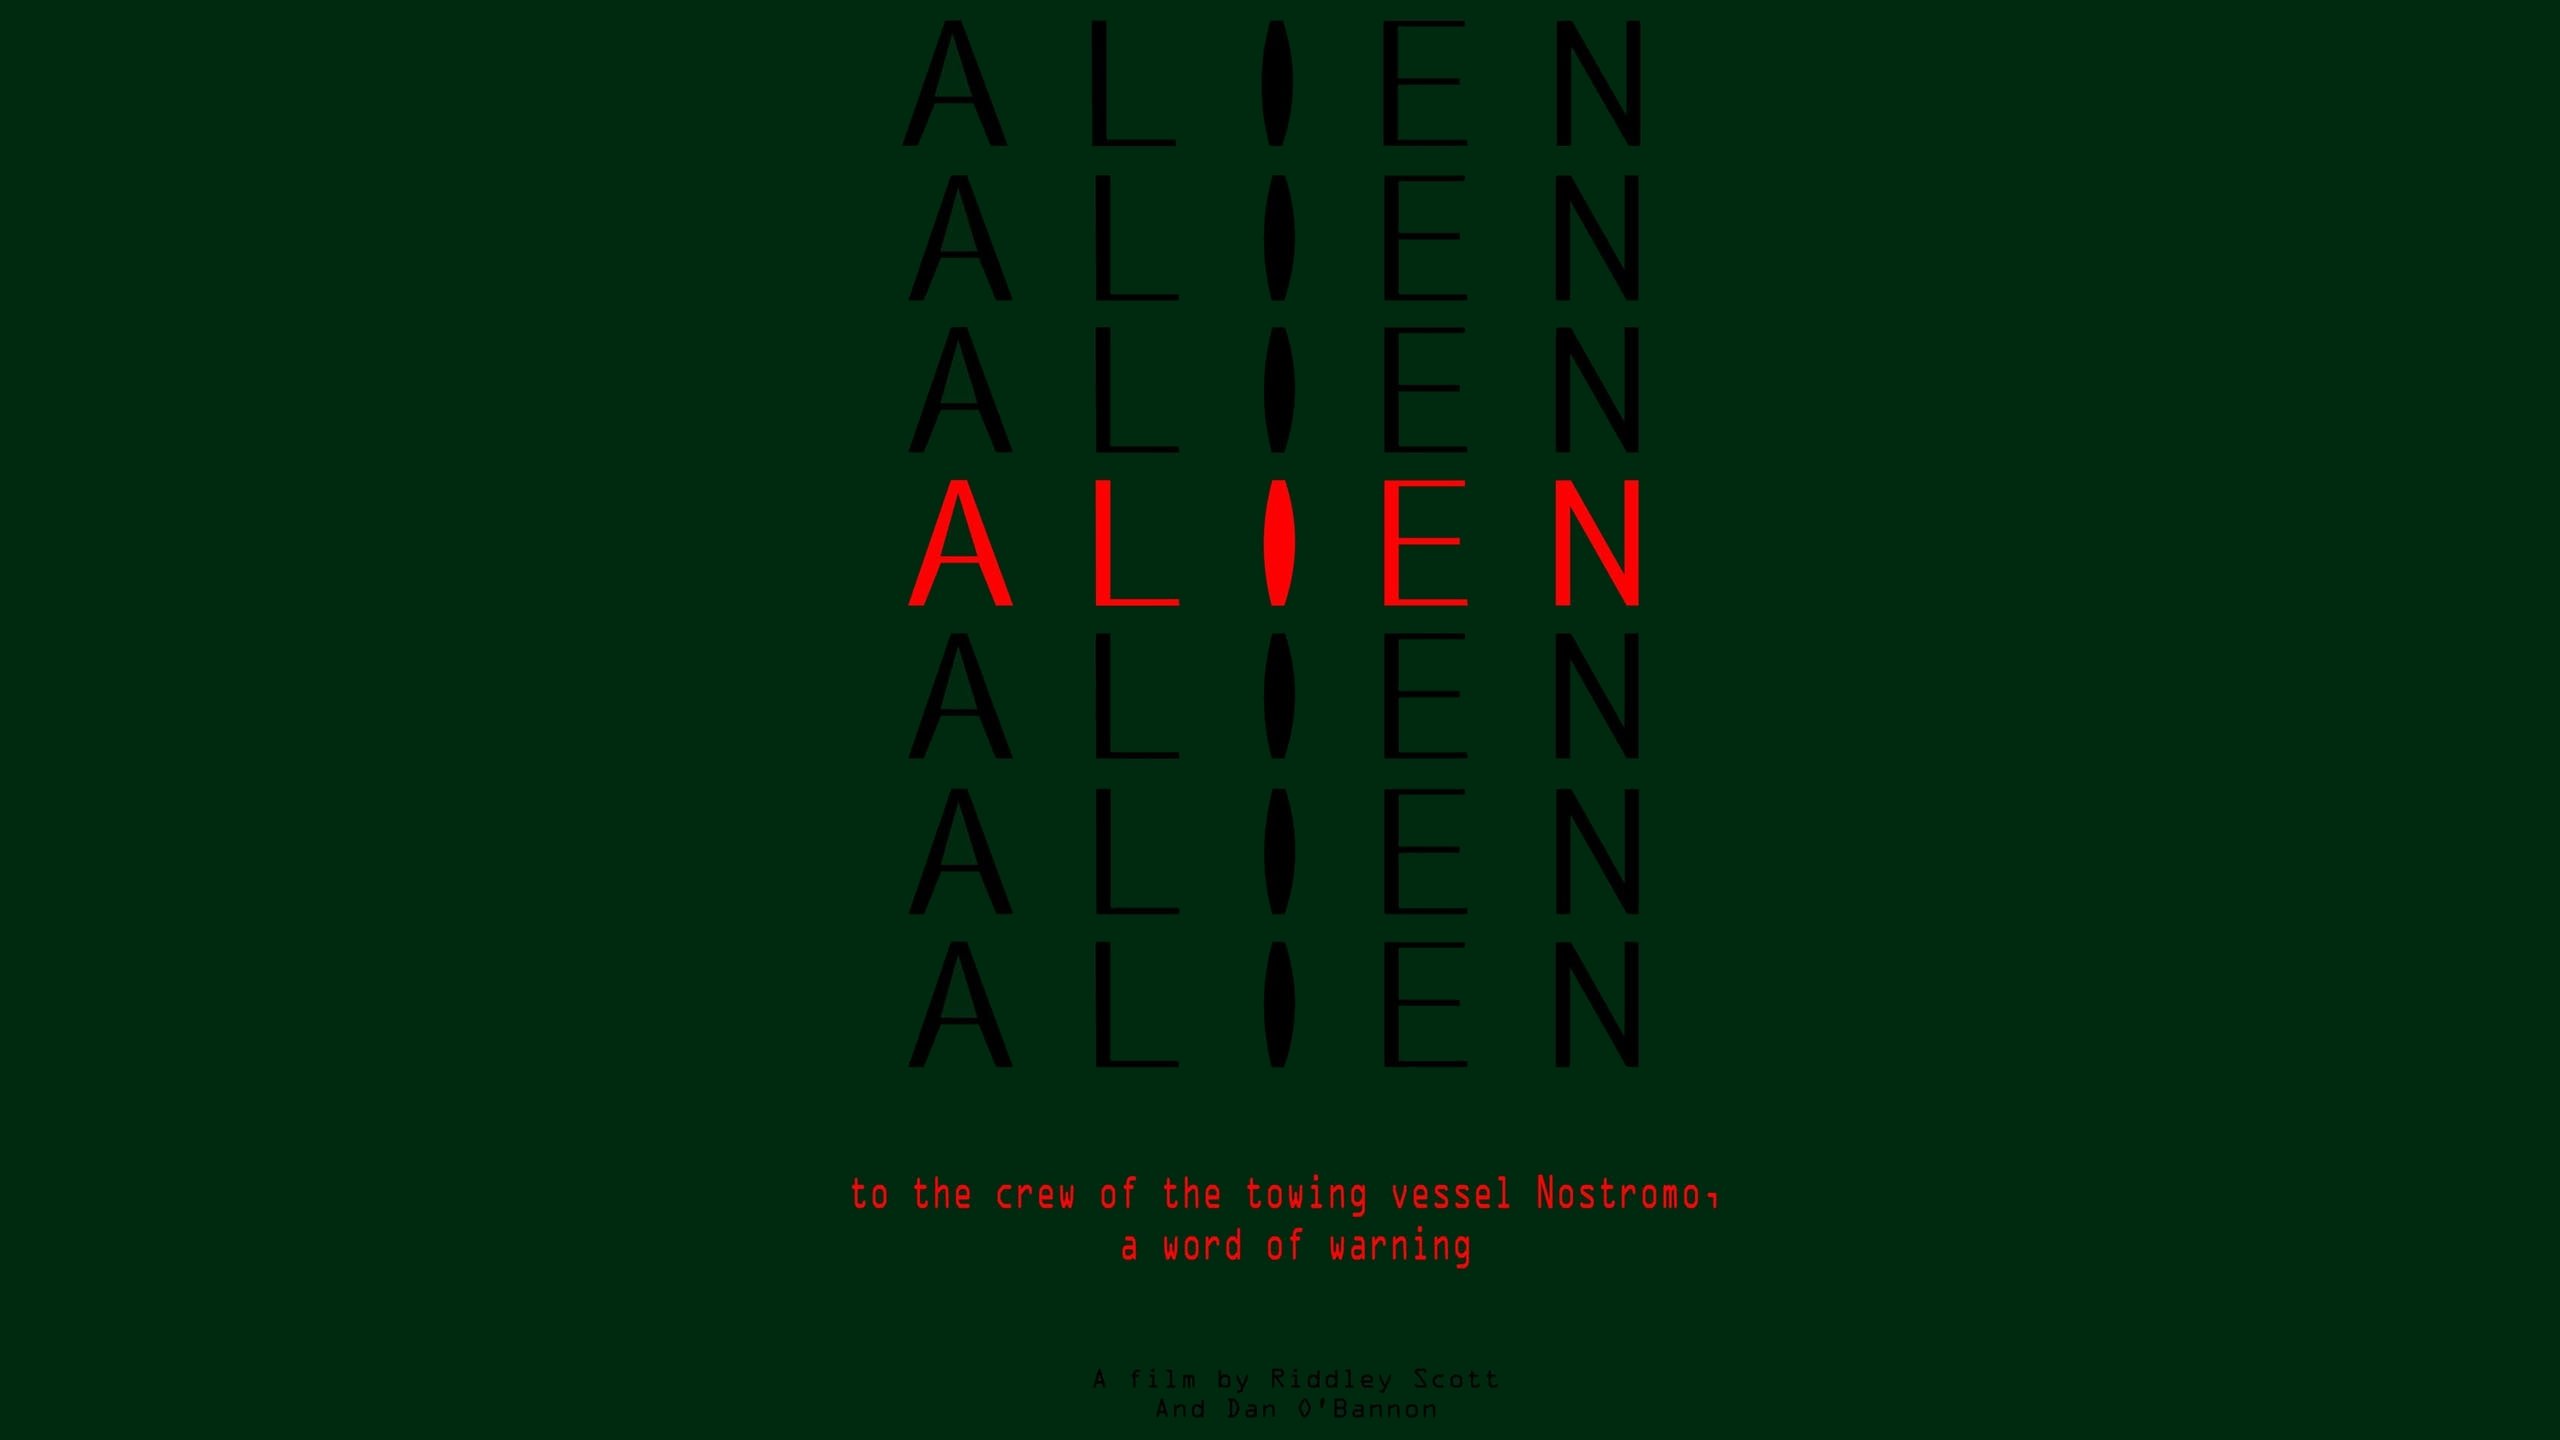 Best Alien Movie wallpaper ID:25344 for High Resolution hd 2560x1440 desktop